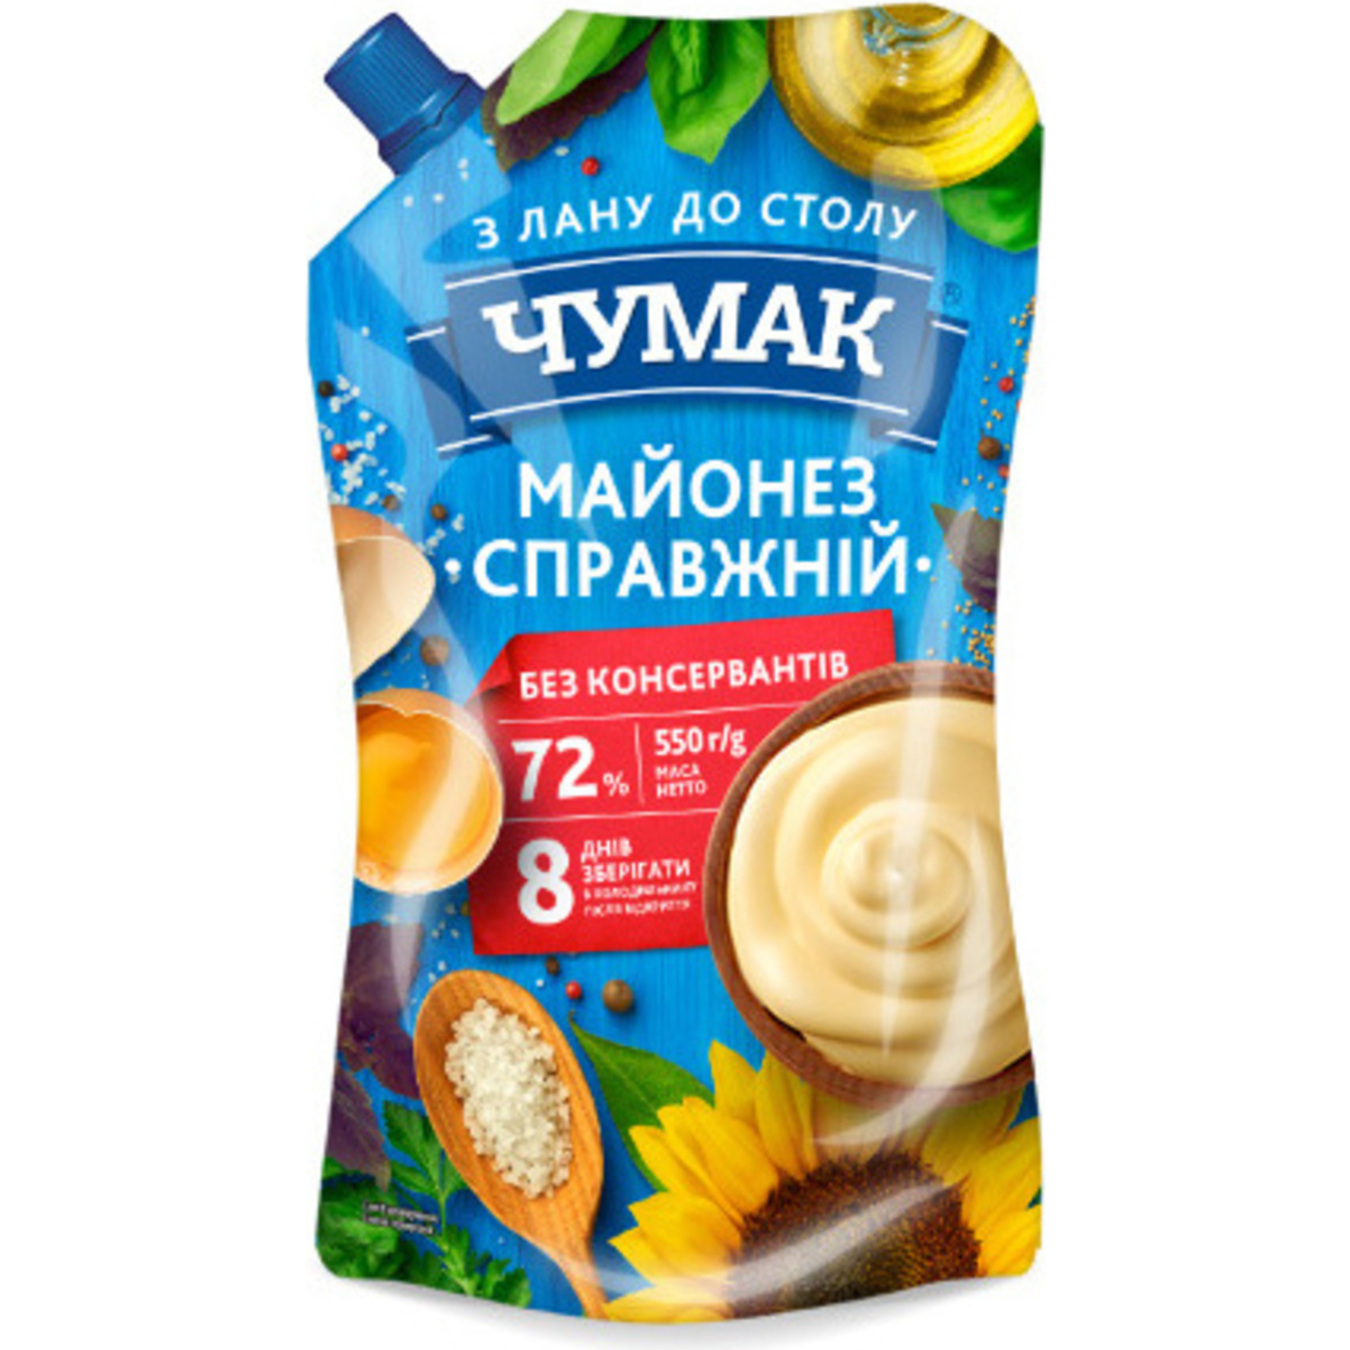 Chumak Spravzhniy Mayonnaise 72% 550g